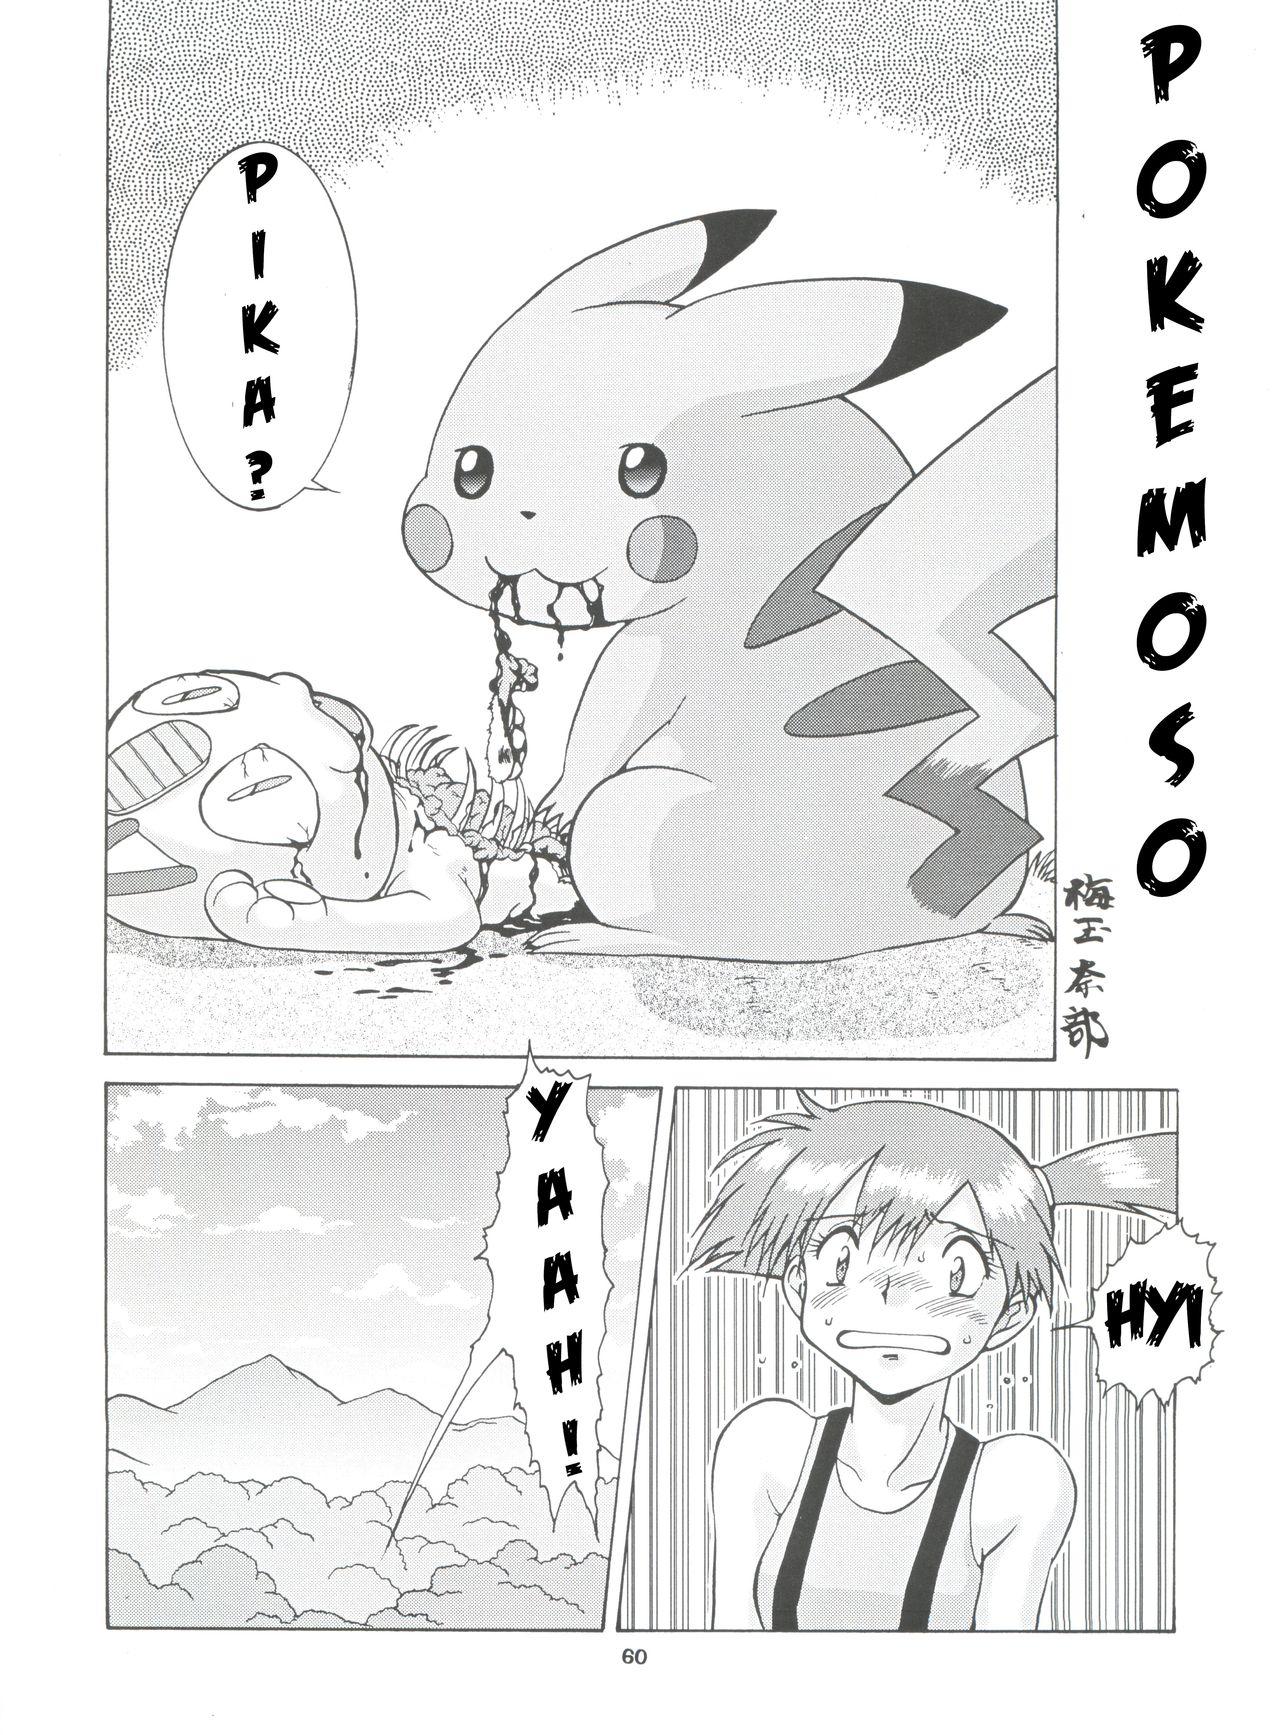 She Pokemoso - Pokemon | pocket monsters Wrestling - Page 1